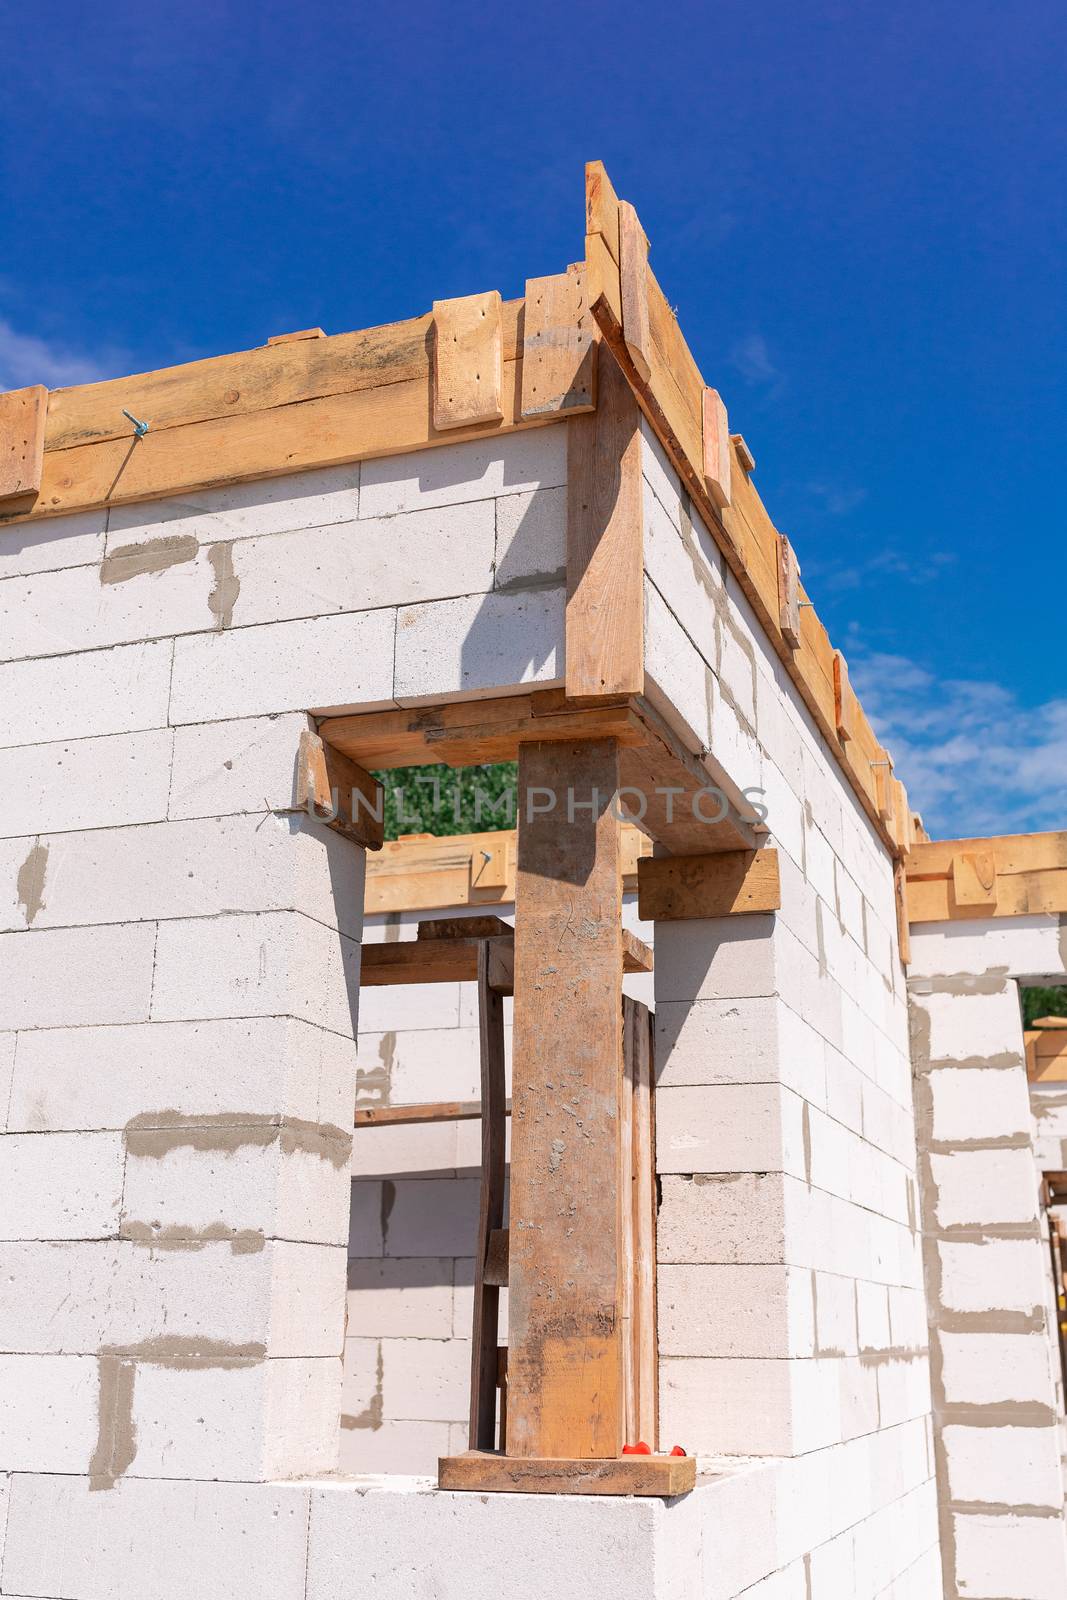 House under construction, walls of gas concrete blocks, wooden reinforcement and concrete foundation. by Len44ik